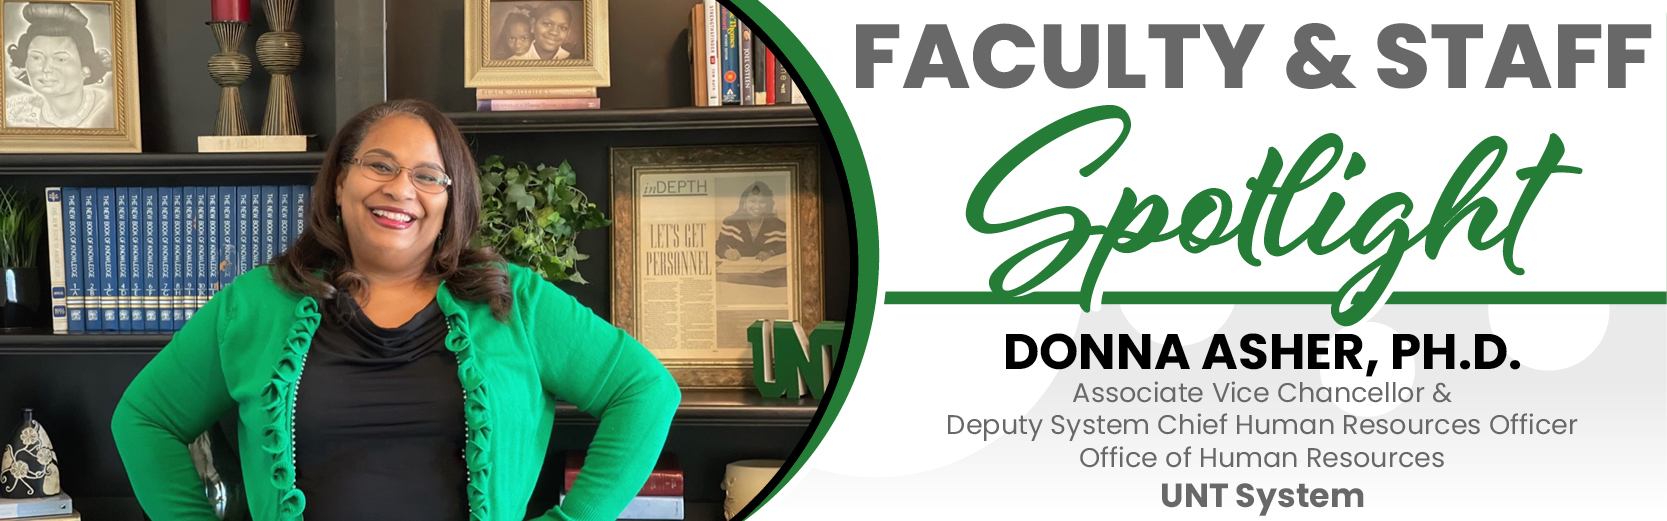 Faculty & Staff Spotlight: Donna Asher, UNT System